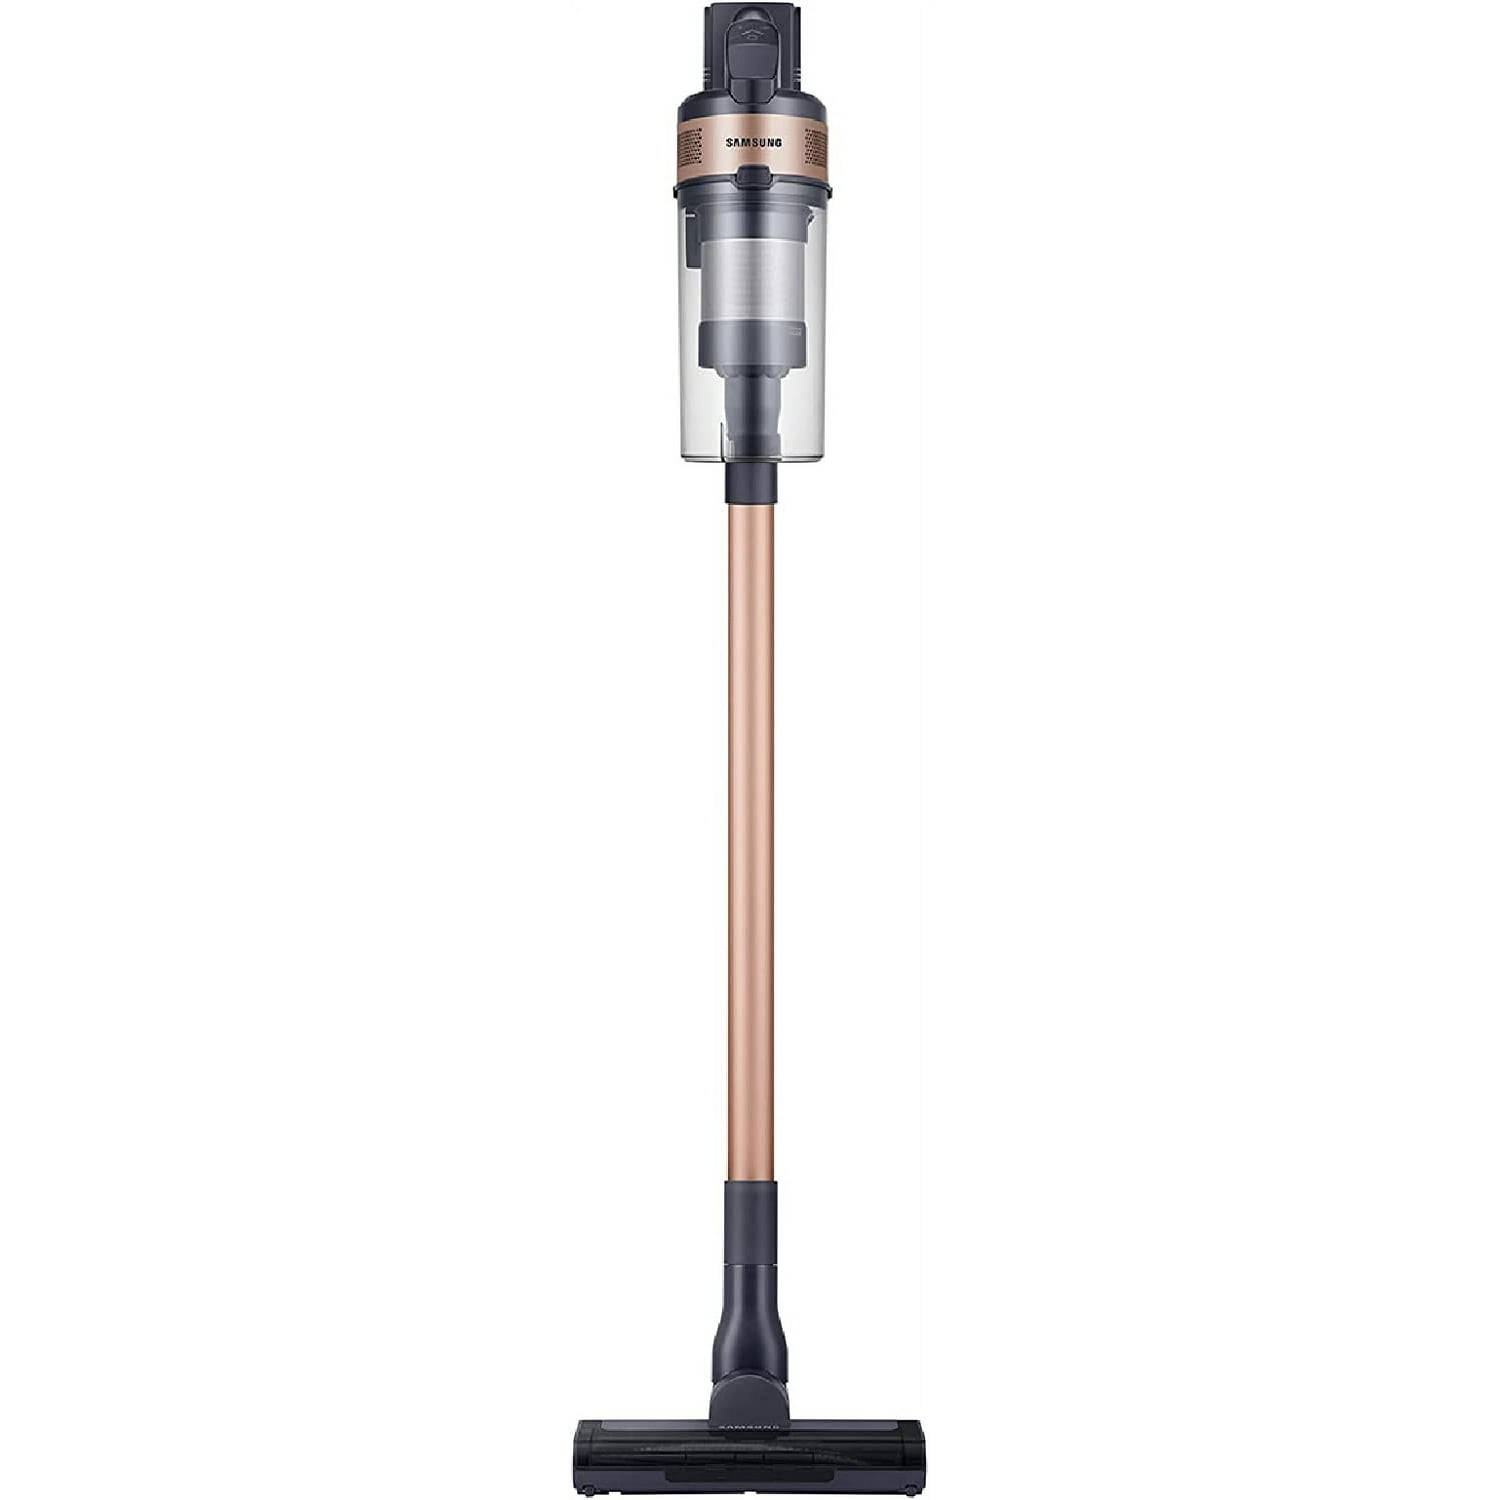 Samsung Jet 60 Flex Cordless Stick Vacuum $149 + Free Shipping